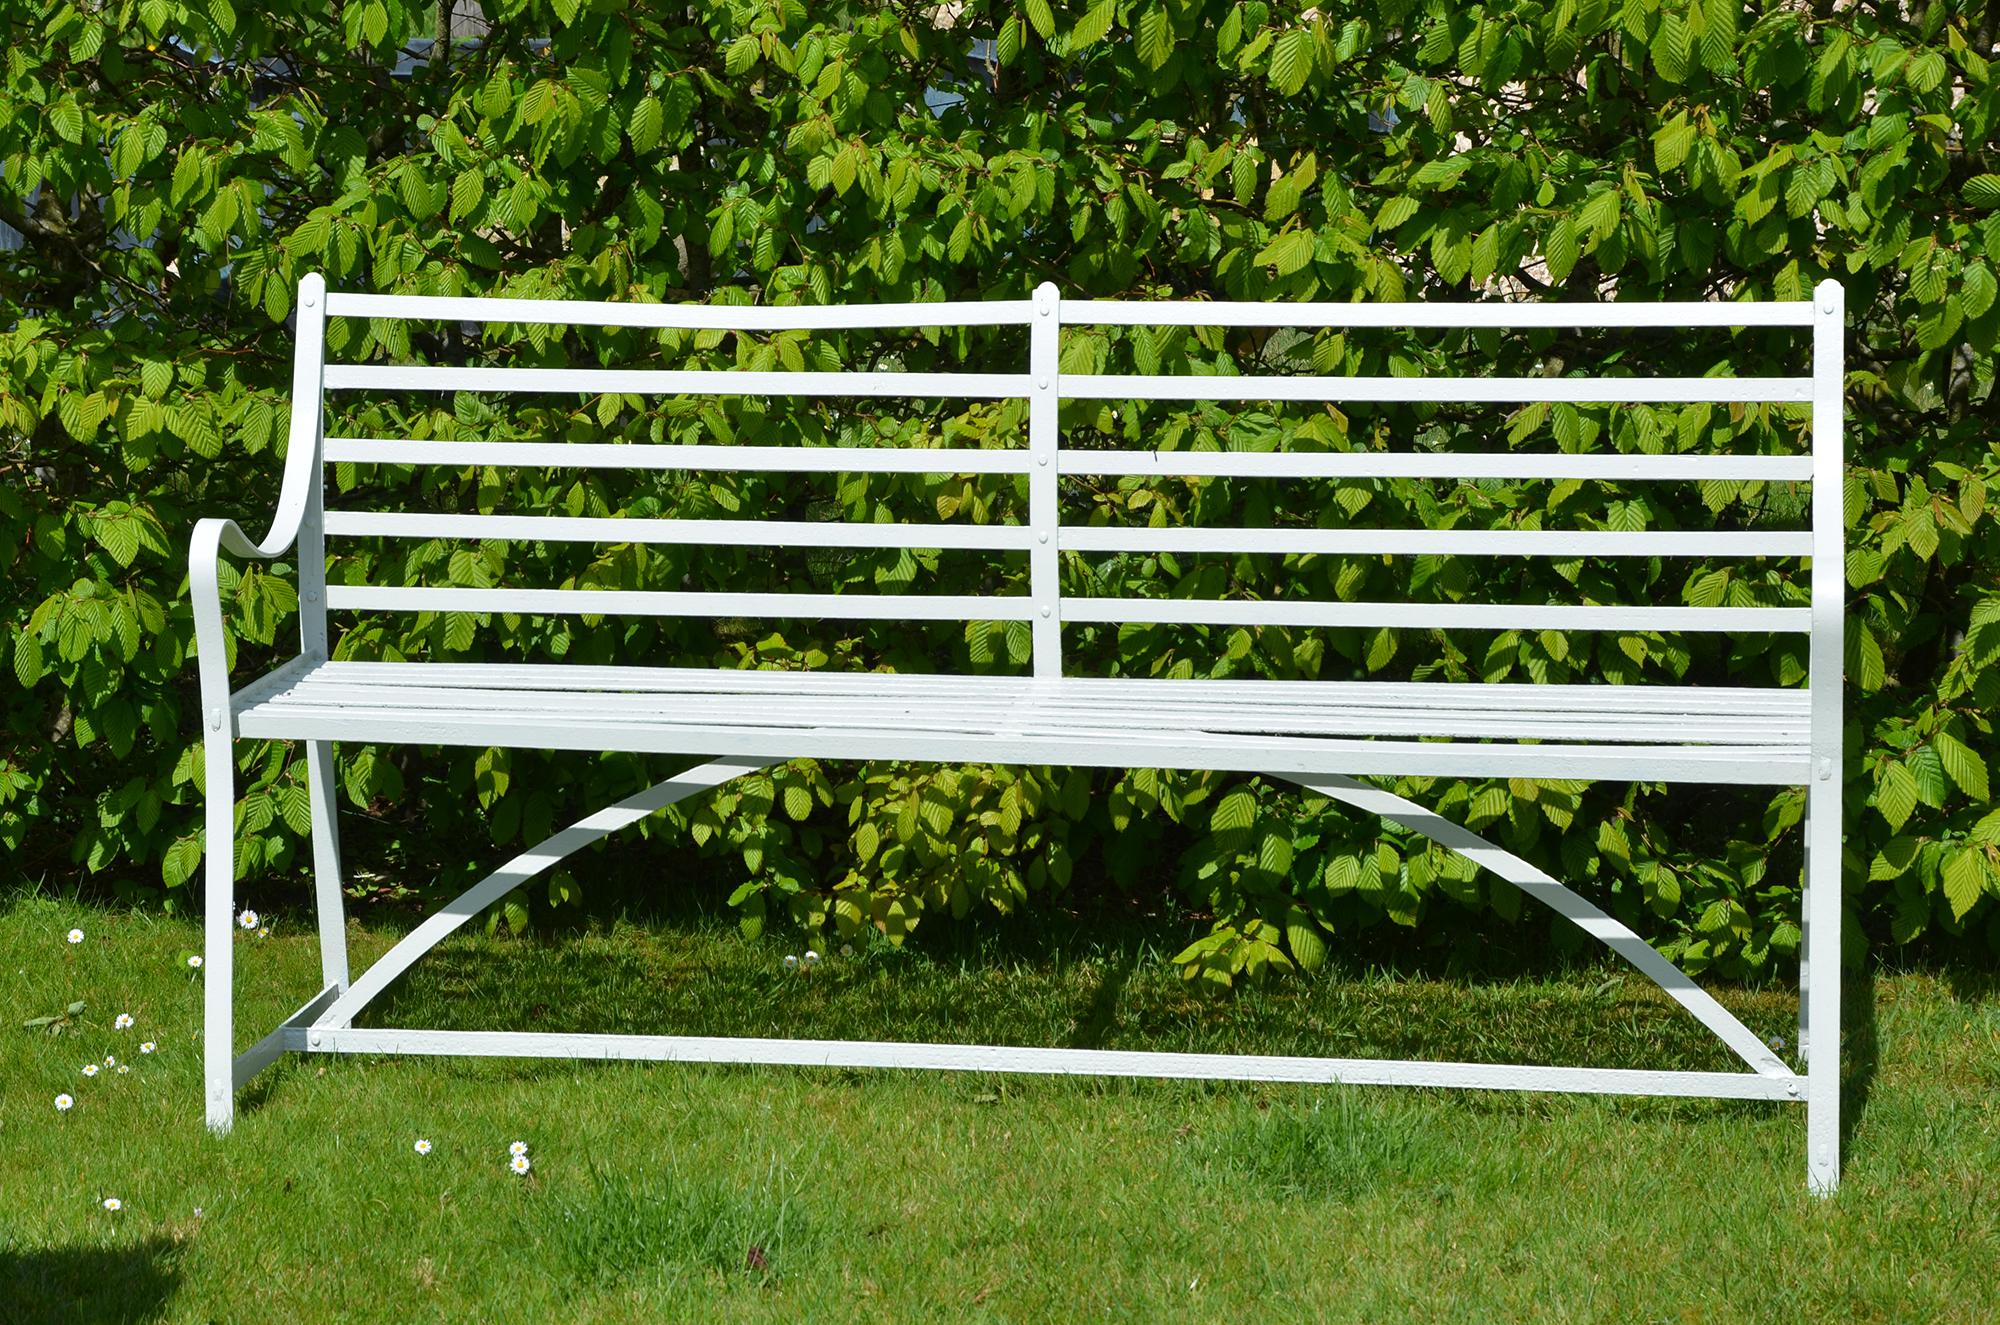 A simple, late 19th century, slat design wrought iron garden bench.